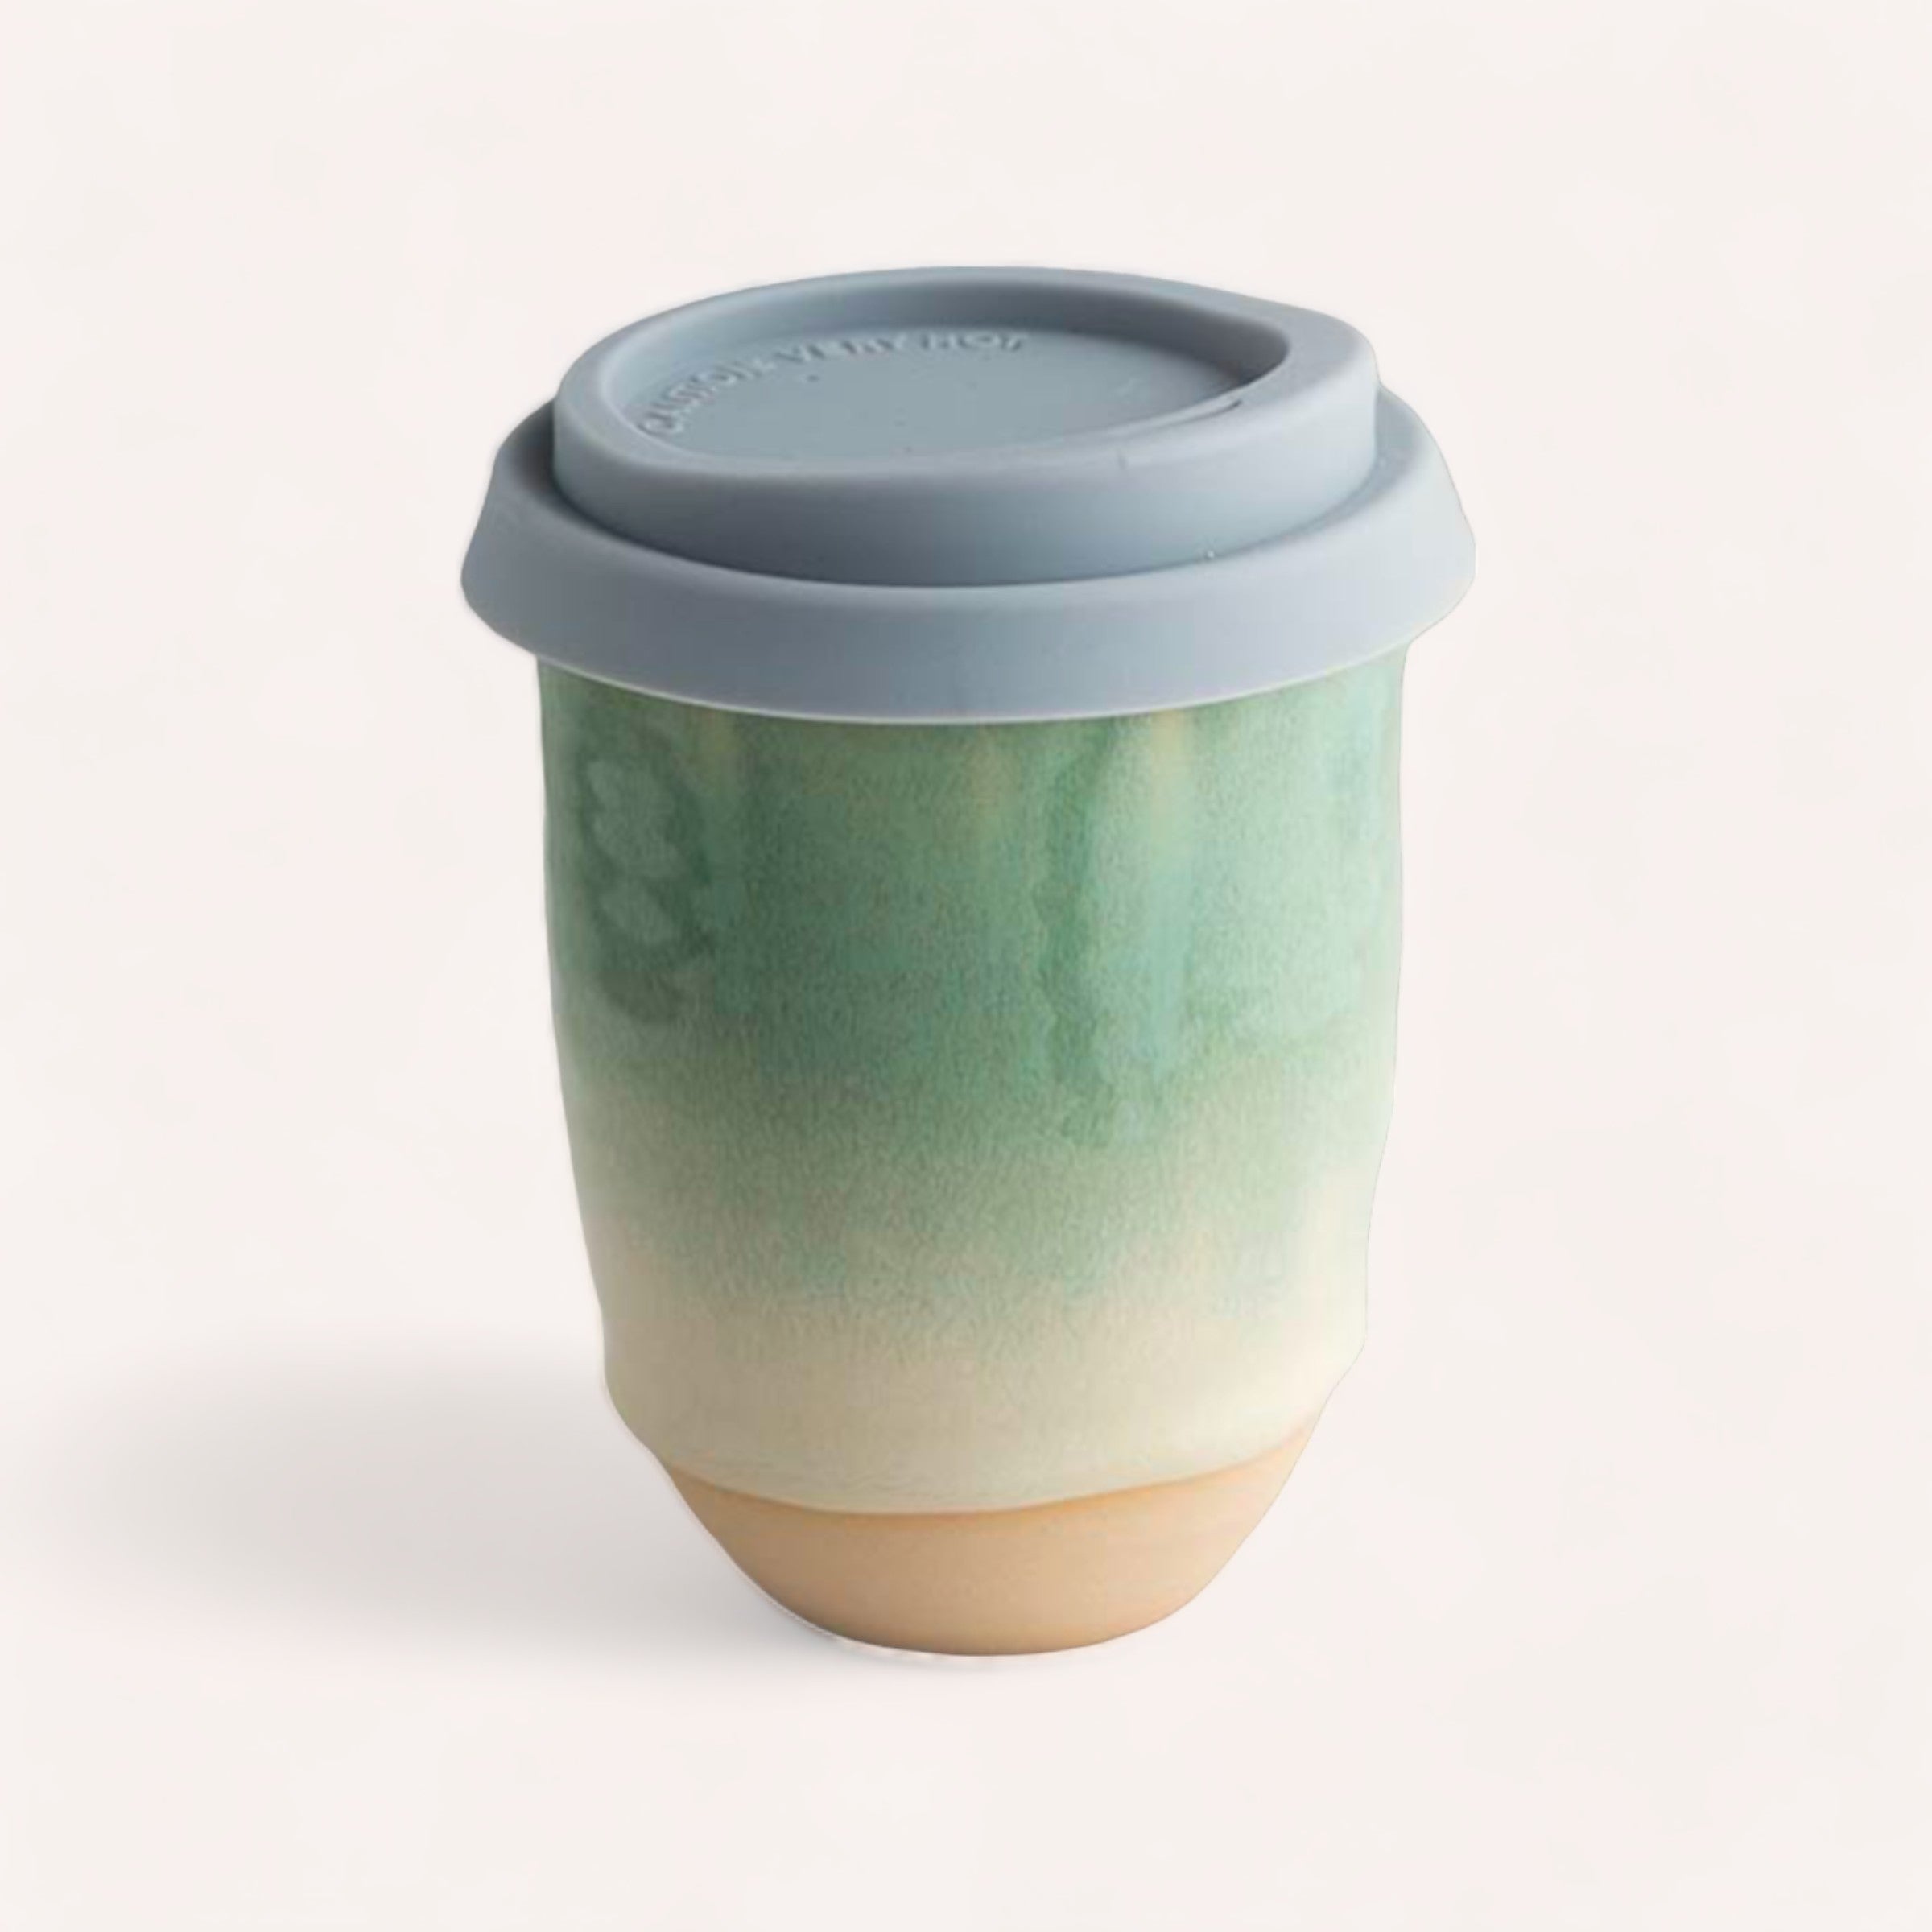 jade ceramic keep cup by sam mayell